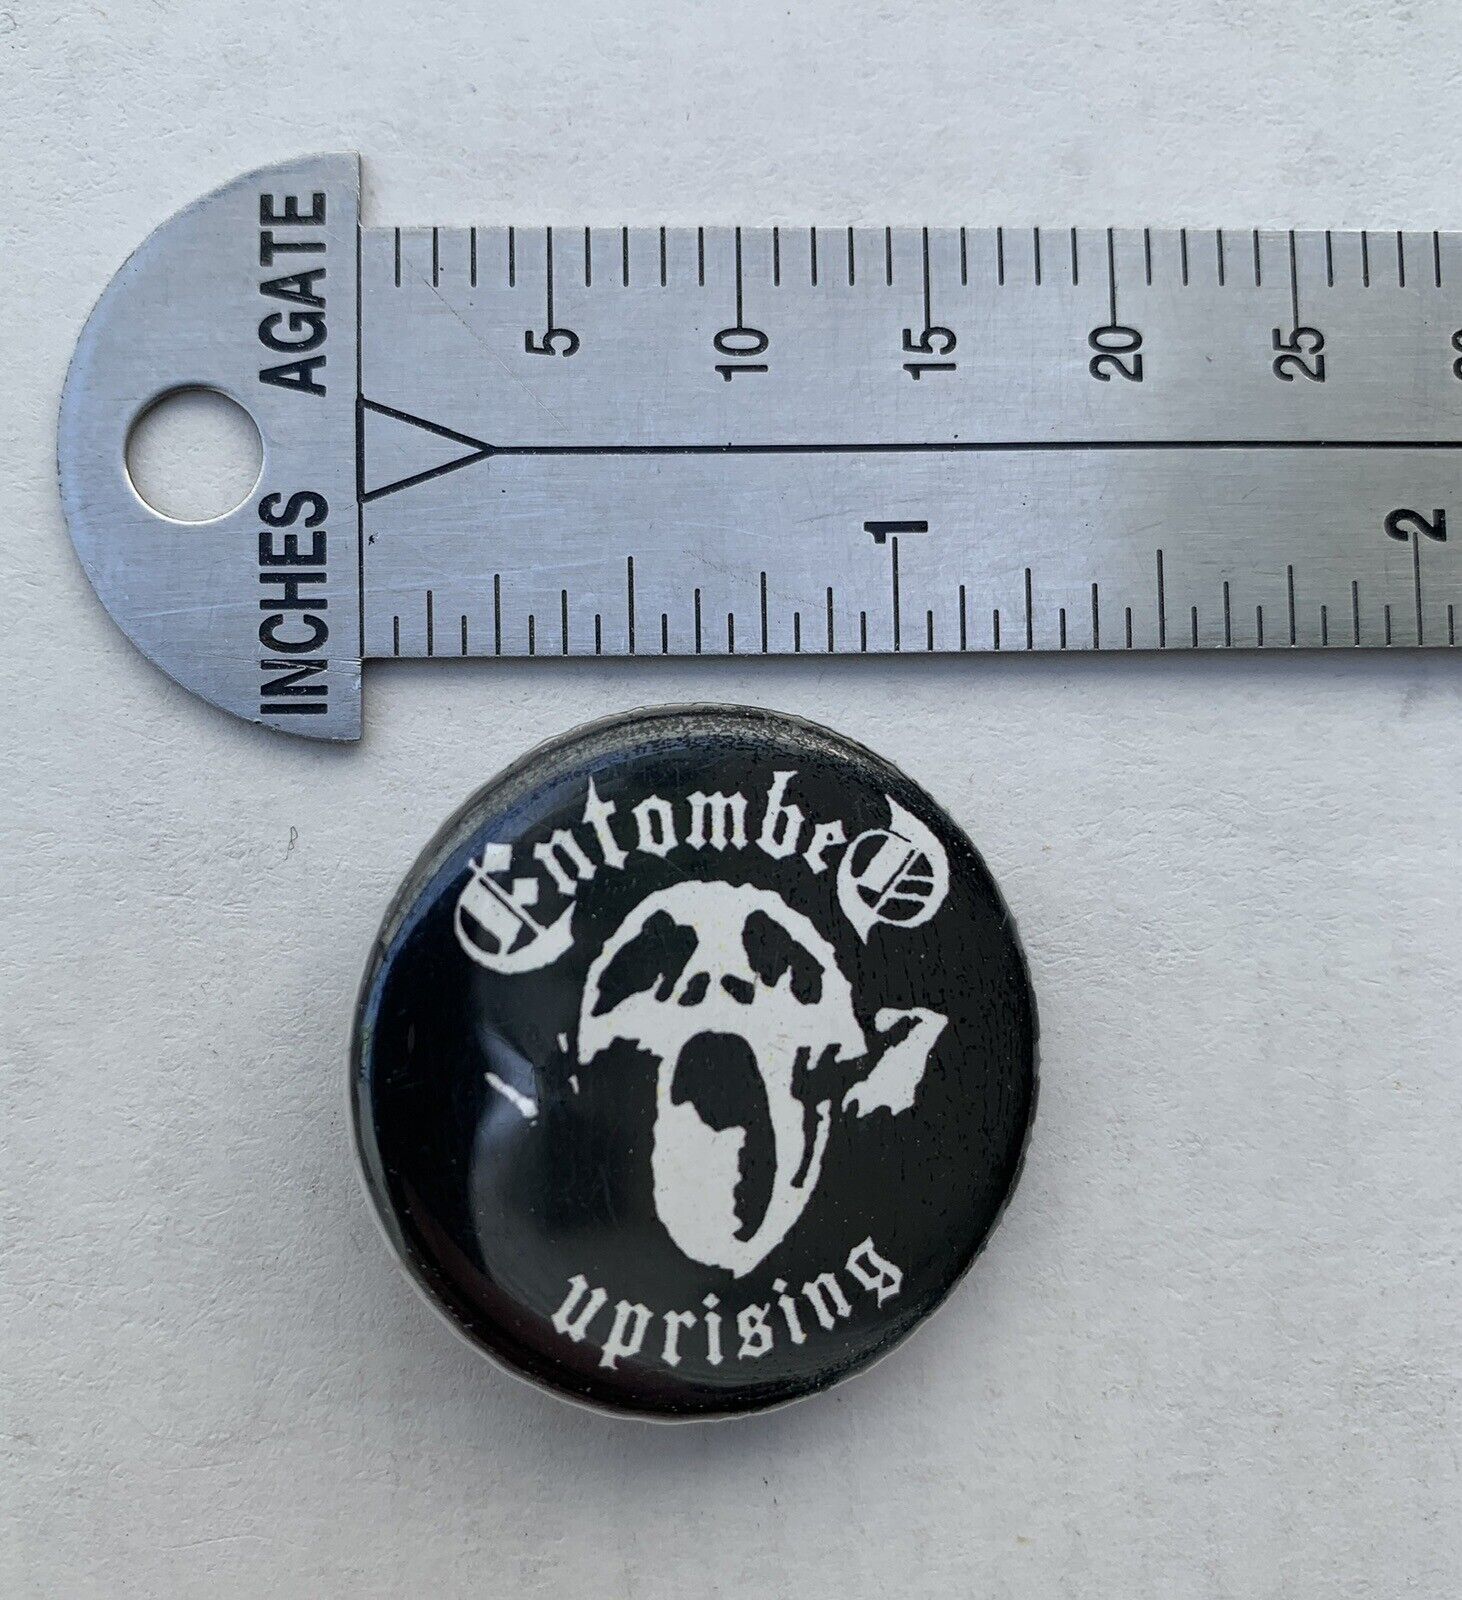 Entombed - Uprising Pin Back Button Jacket Pin Hat Pin Swedish Death Metal Band